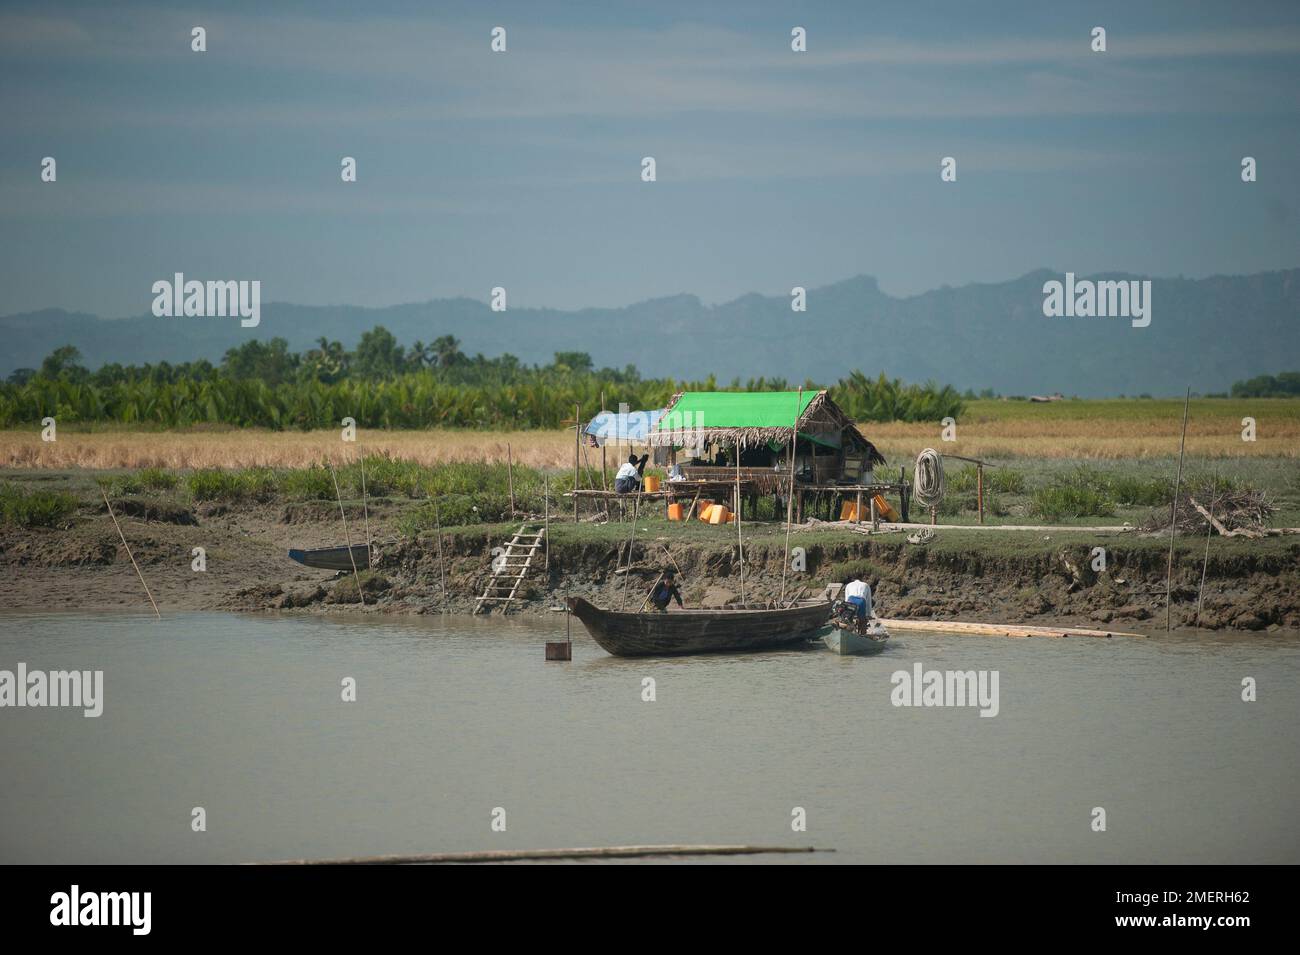 Myanmar, Birmania occidentale, Mrauk U, capanna di palafitte e barca sul fiume Foto Stock